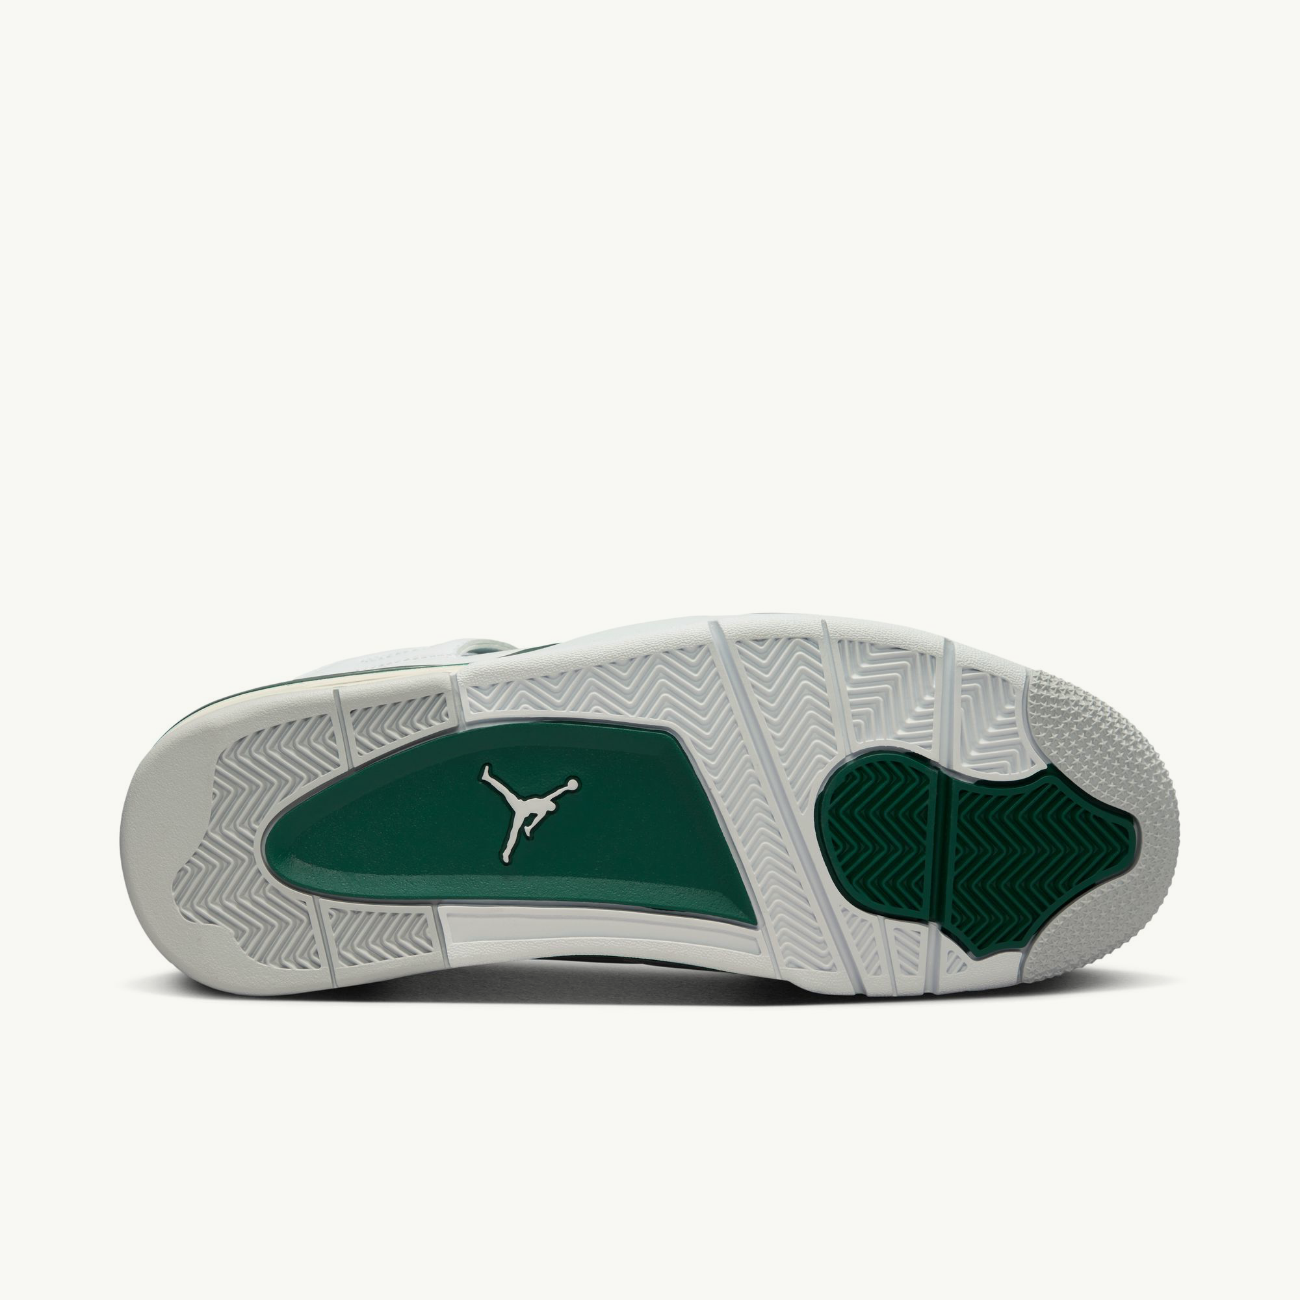 Air Jordan 4 Retro - 'Oxidized Green'